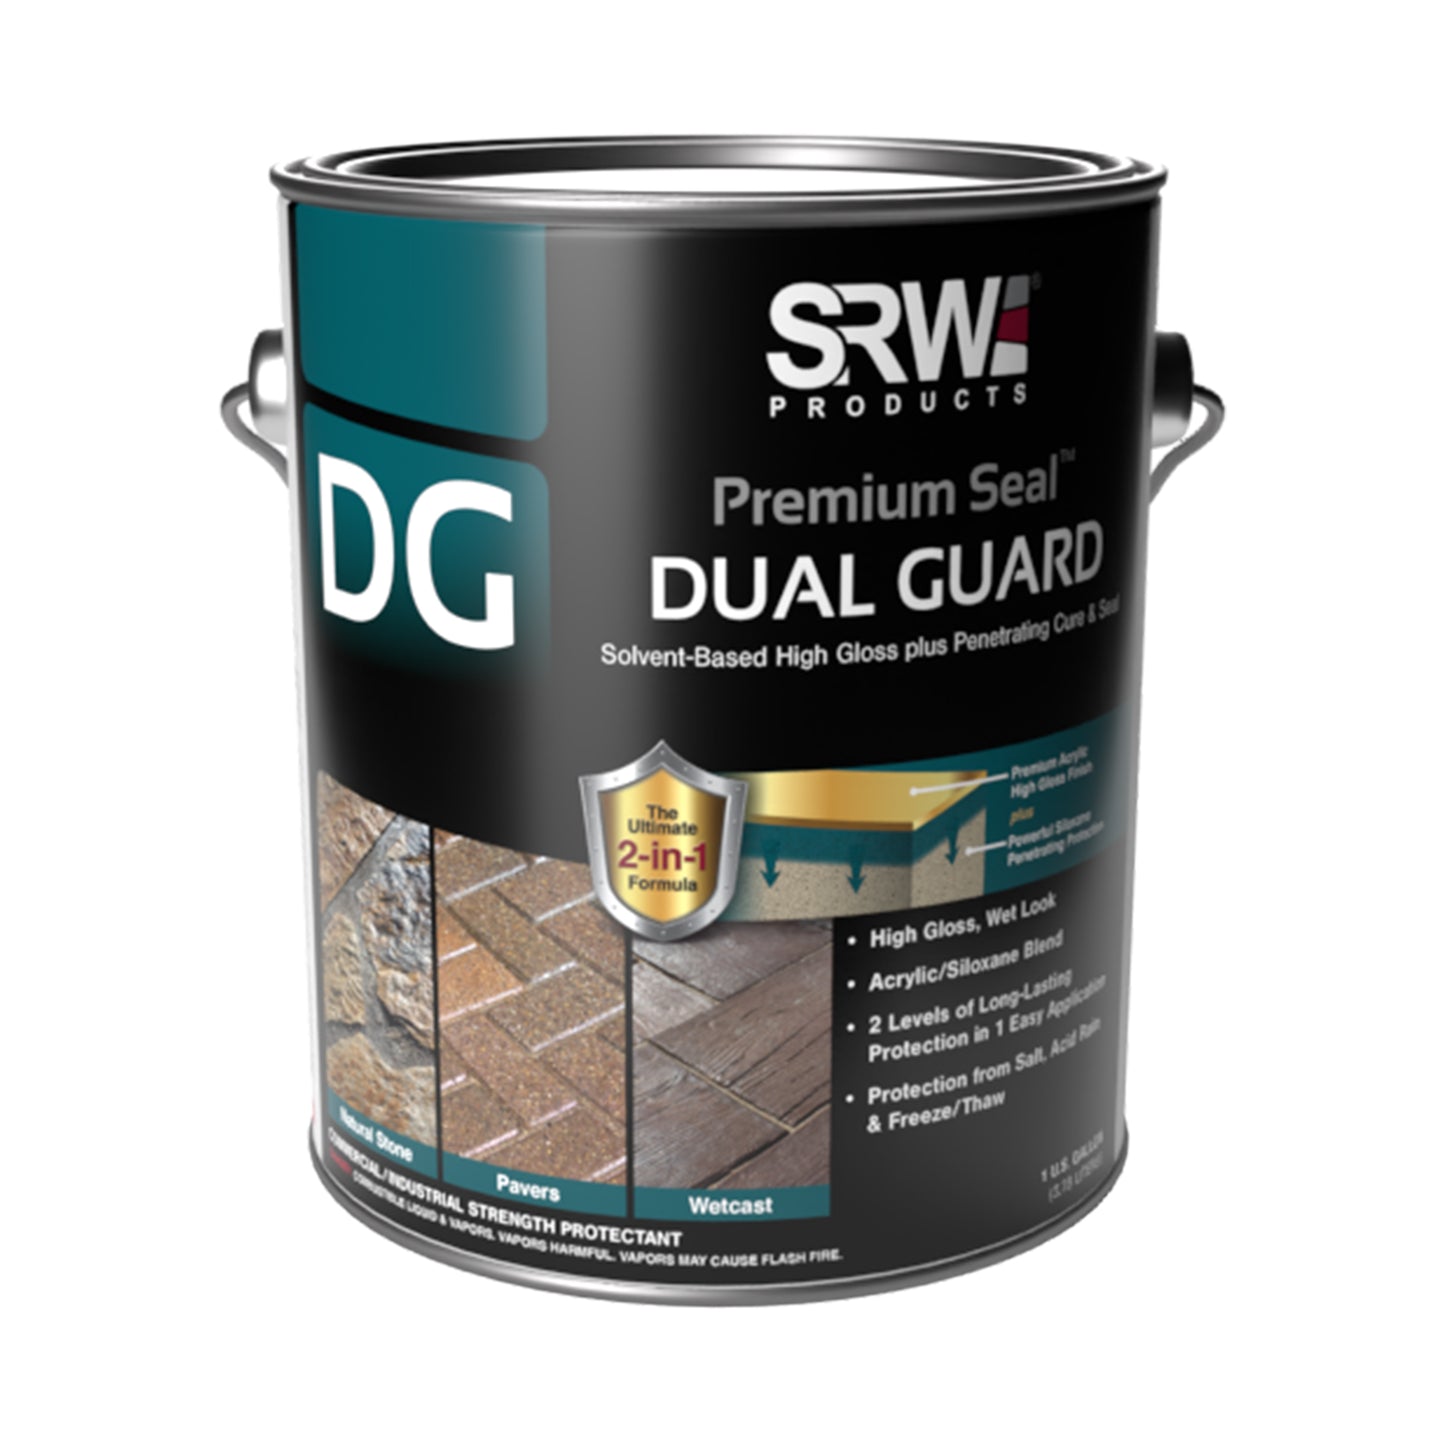 SRW Products DG Dual Guard - Premium Seal™SRW Products DG Dual Guard - Premium Seal™